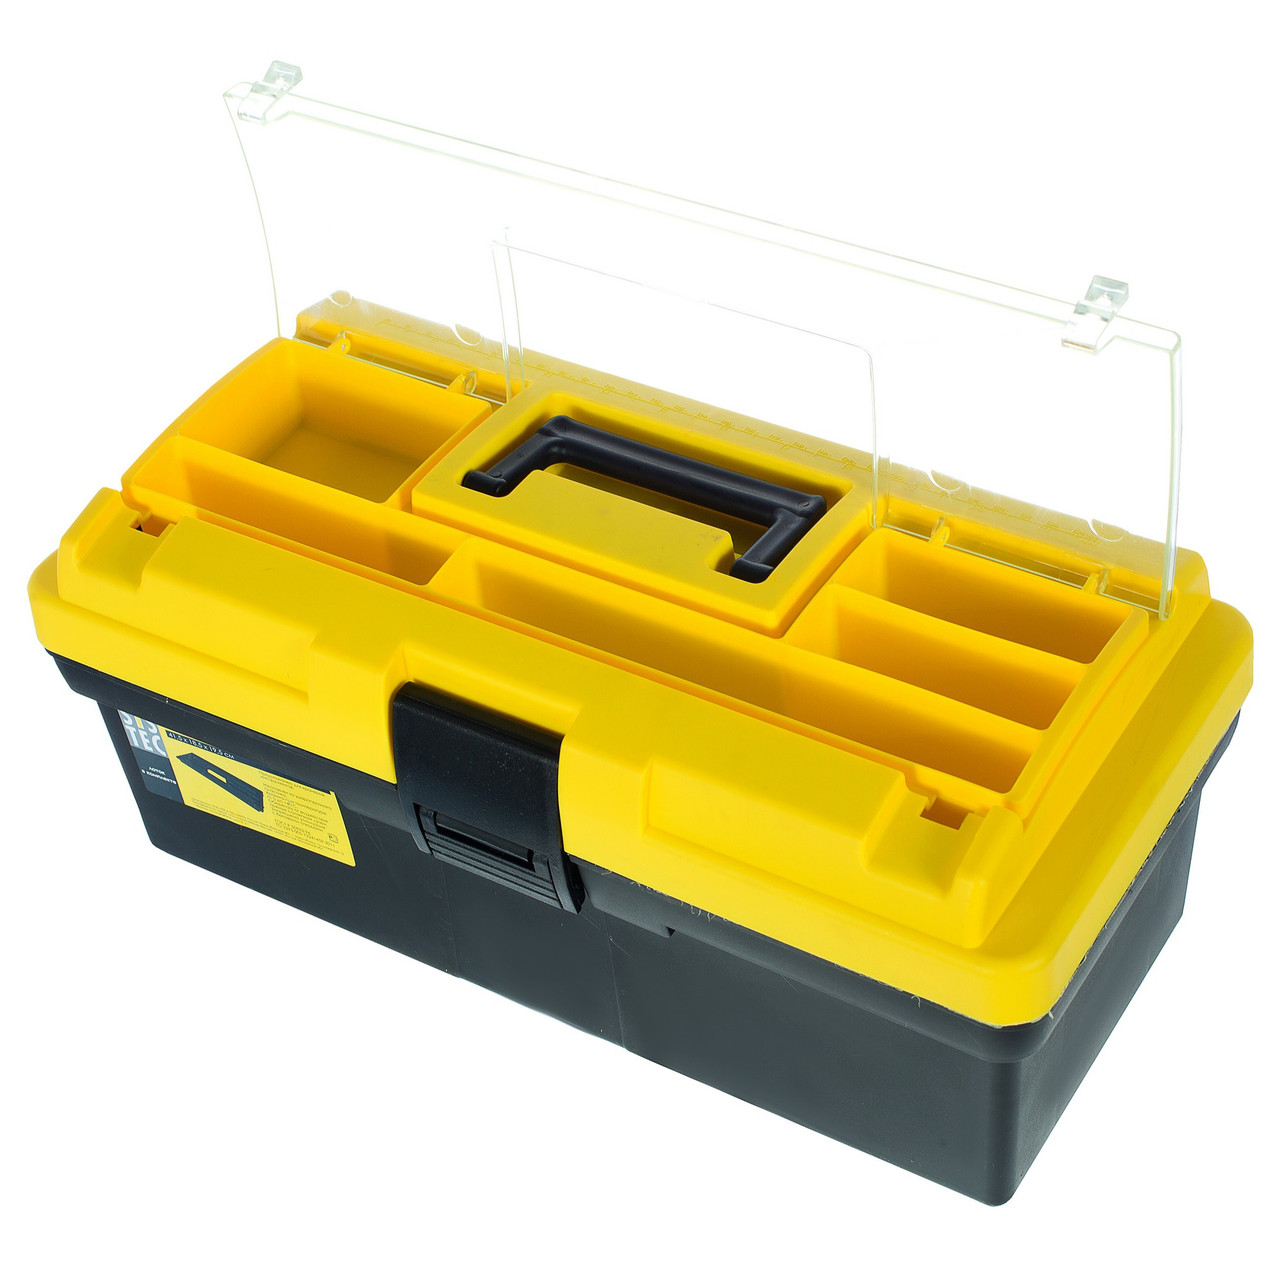 Ящик для инструмента  195х185х415 мм, пластик, цвет черно-жёлтый,съемная полка